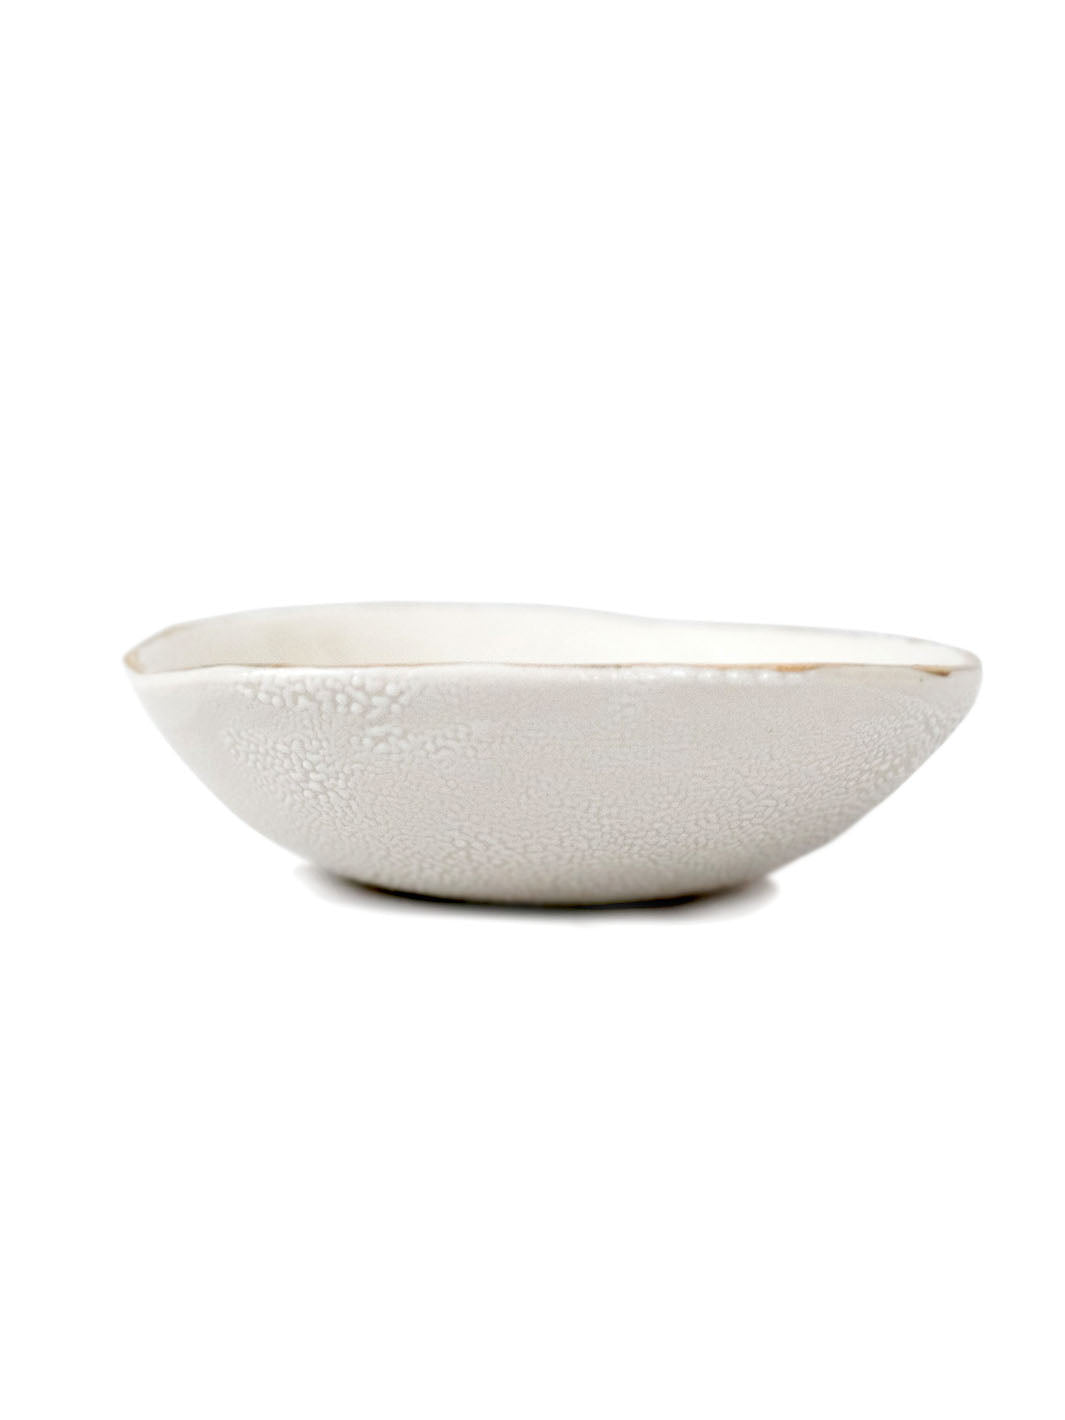 Gold Rim White Porcelain Bowl Earthly Comfort Home Decor 751